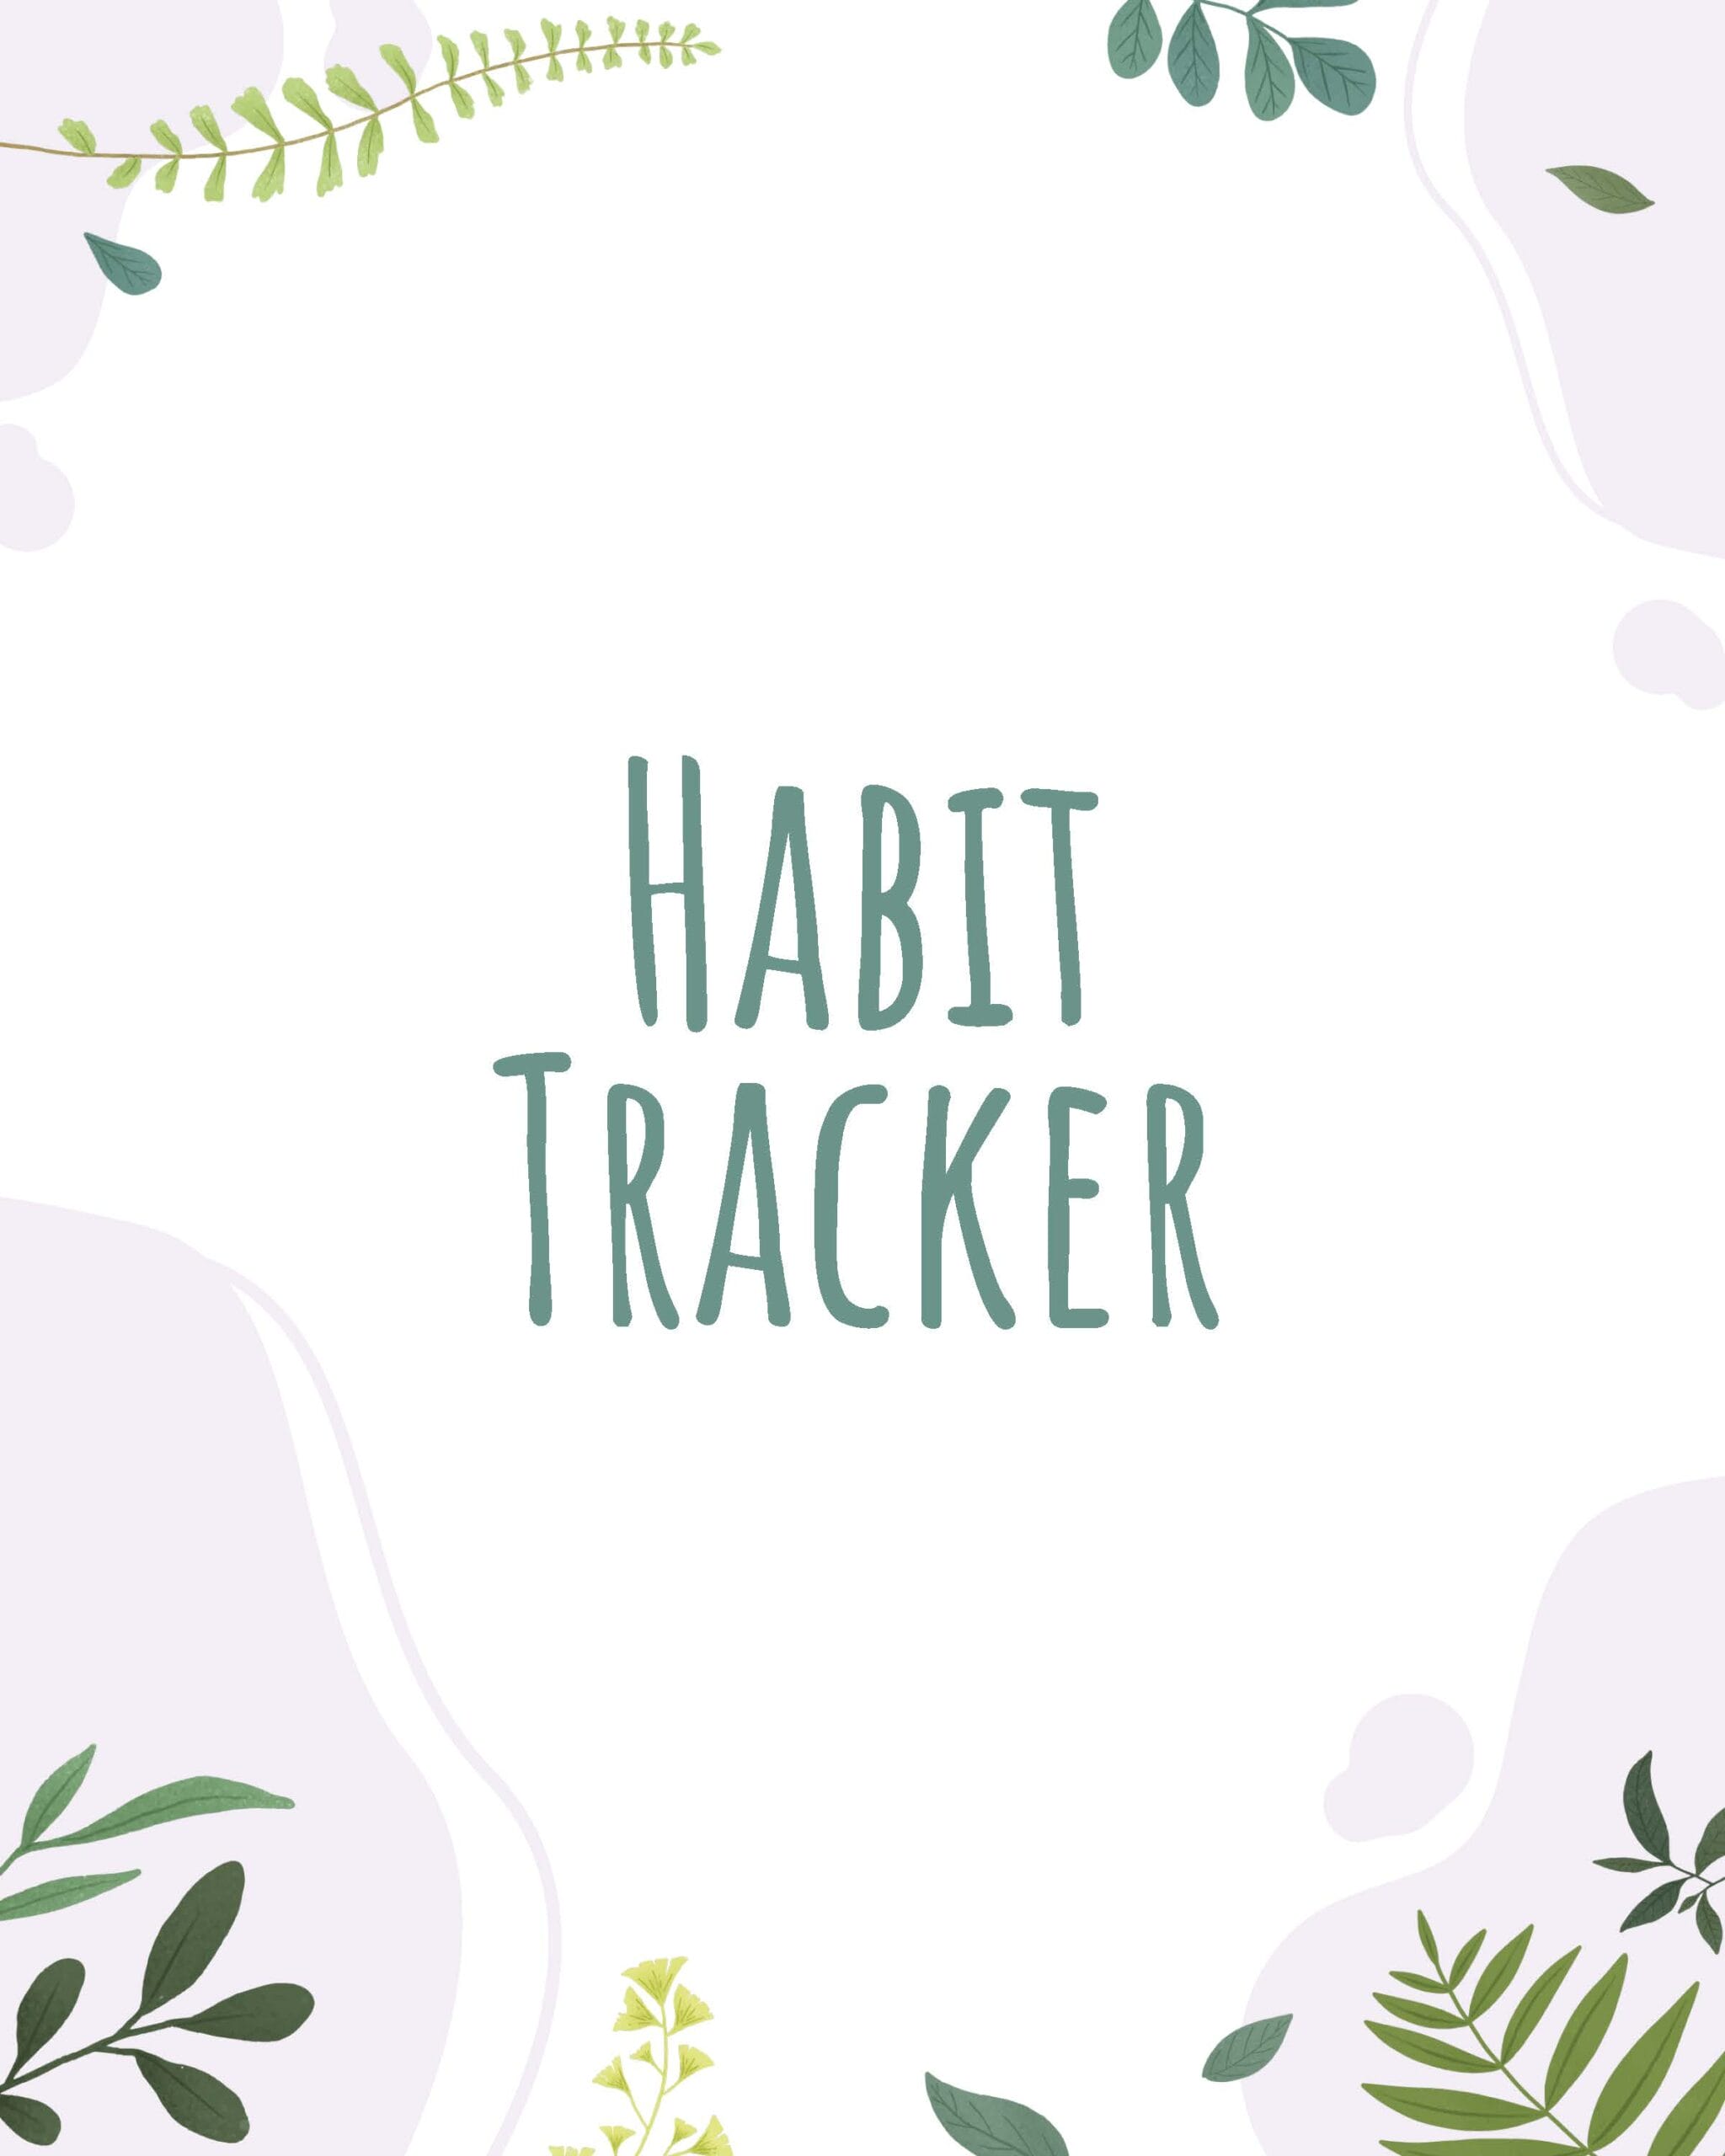 Habit Tracker cover